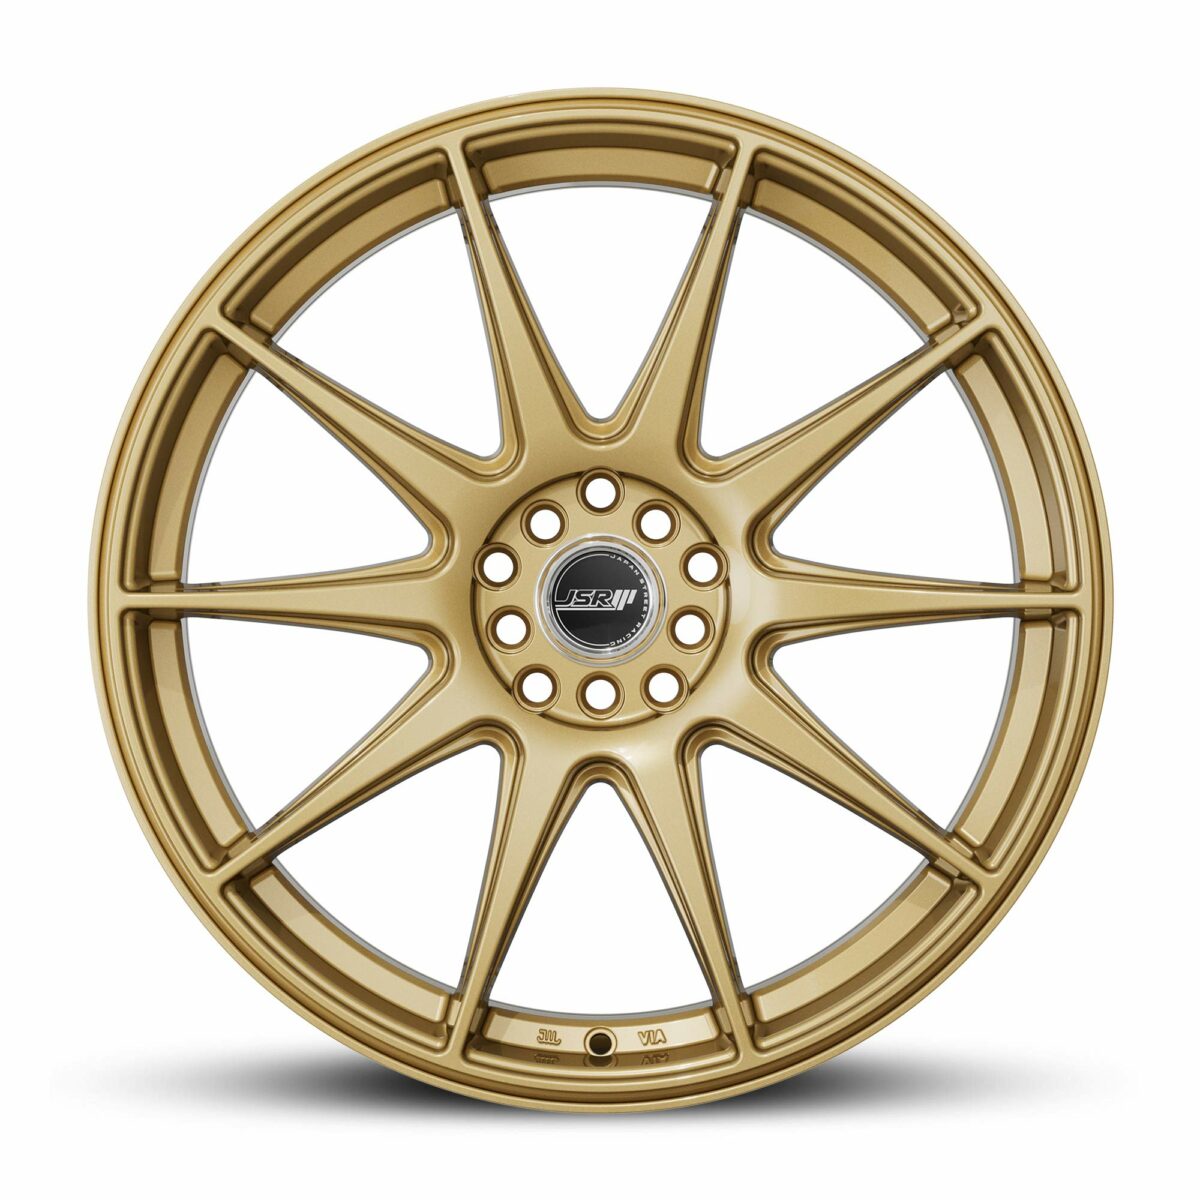 Japan Racing Wheels JSR ST29 Gloss Gold JDM Rims 17 18 19 Inch Alloys